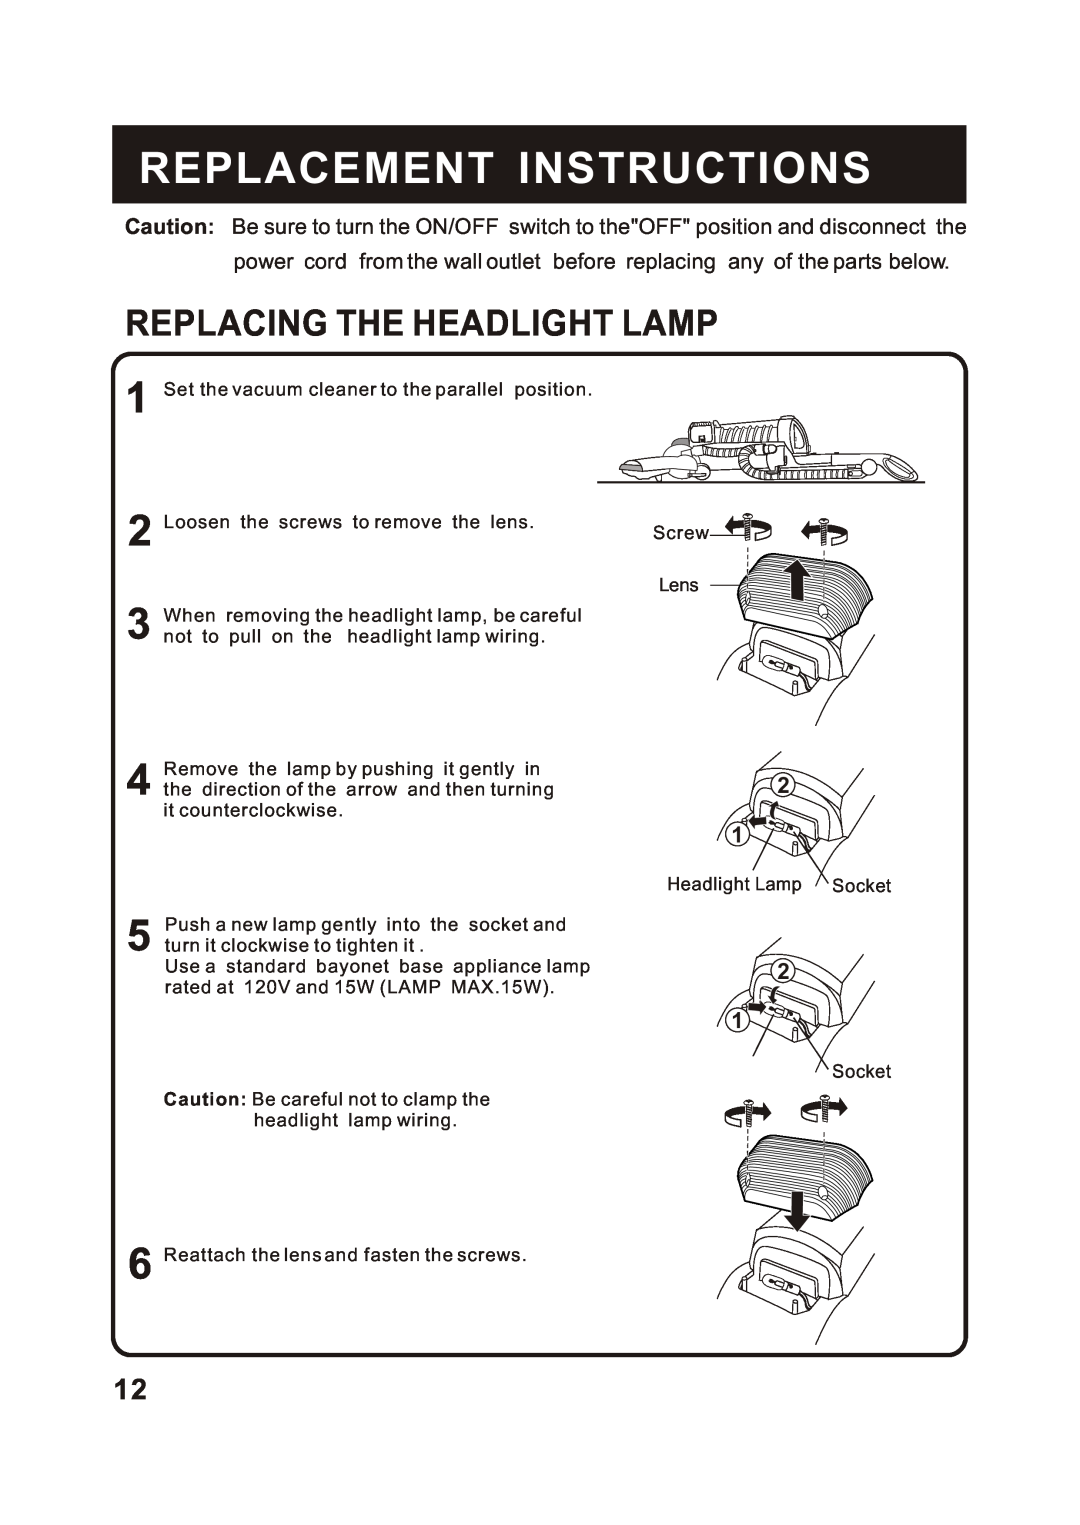 Fantom Vacuum FM741C instruction manual Replacement Instructions, Replacing The Headlight Lamp 